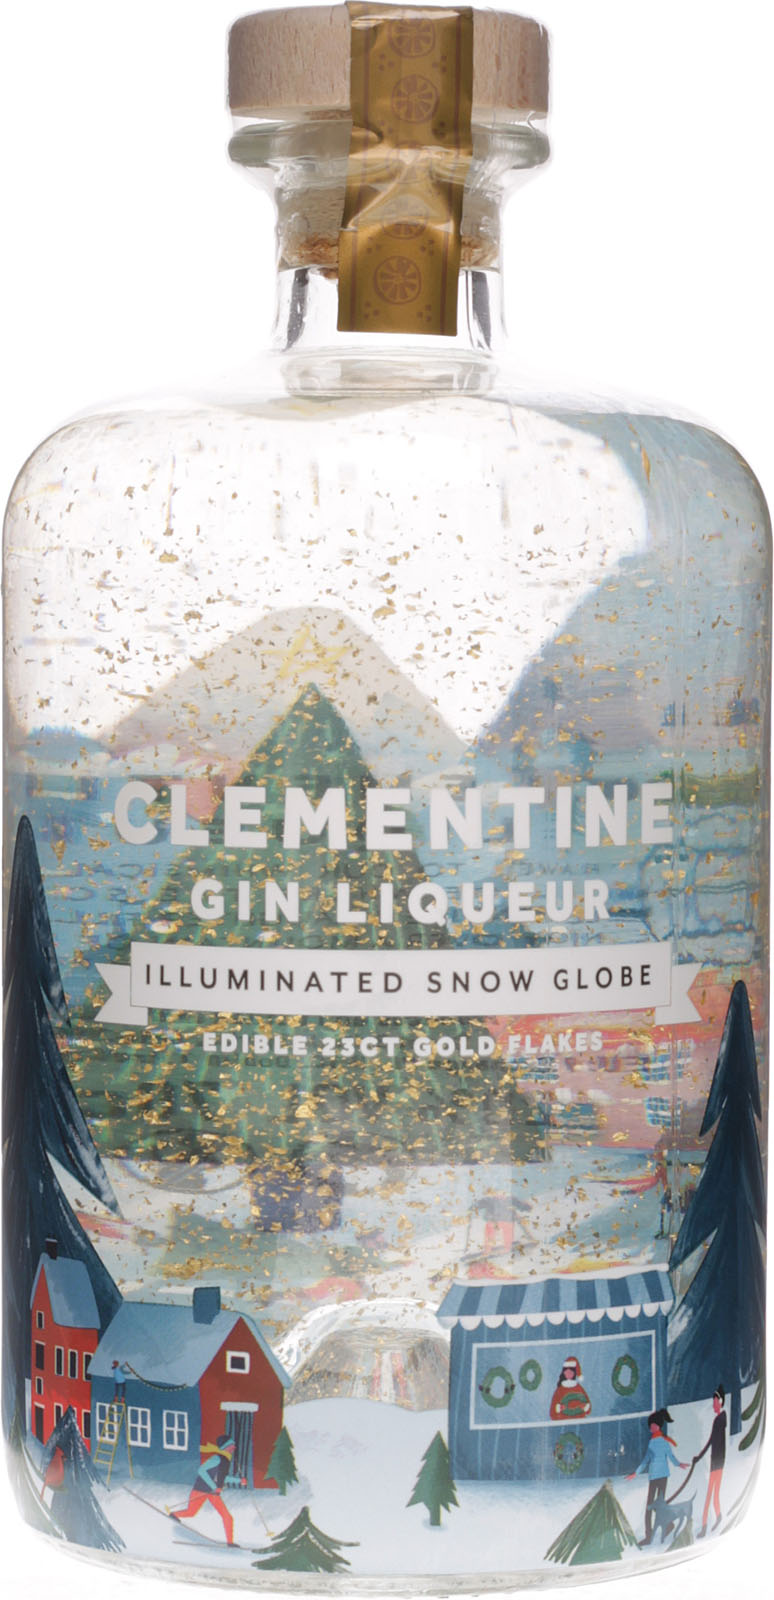 Clementine Globe Liqueur Shop Gin Illuminated k im Snow